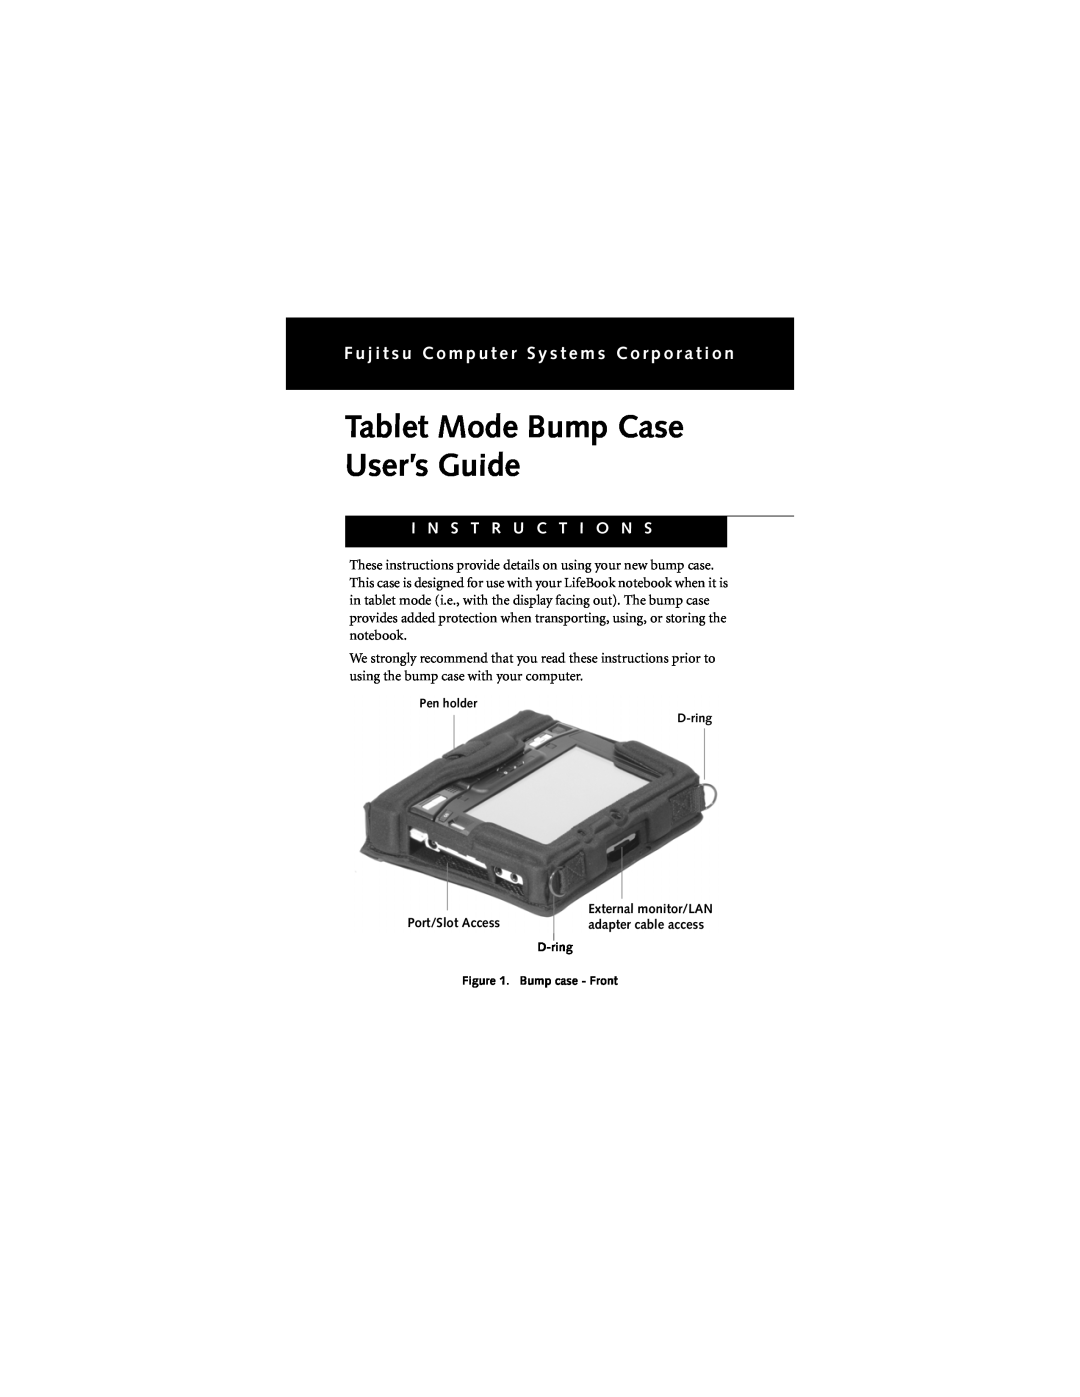 Fujitsu Siemens Computers none manual Tablet Mode Bump Case User’s Guide, I N S T R U C T I O N S 